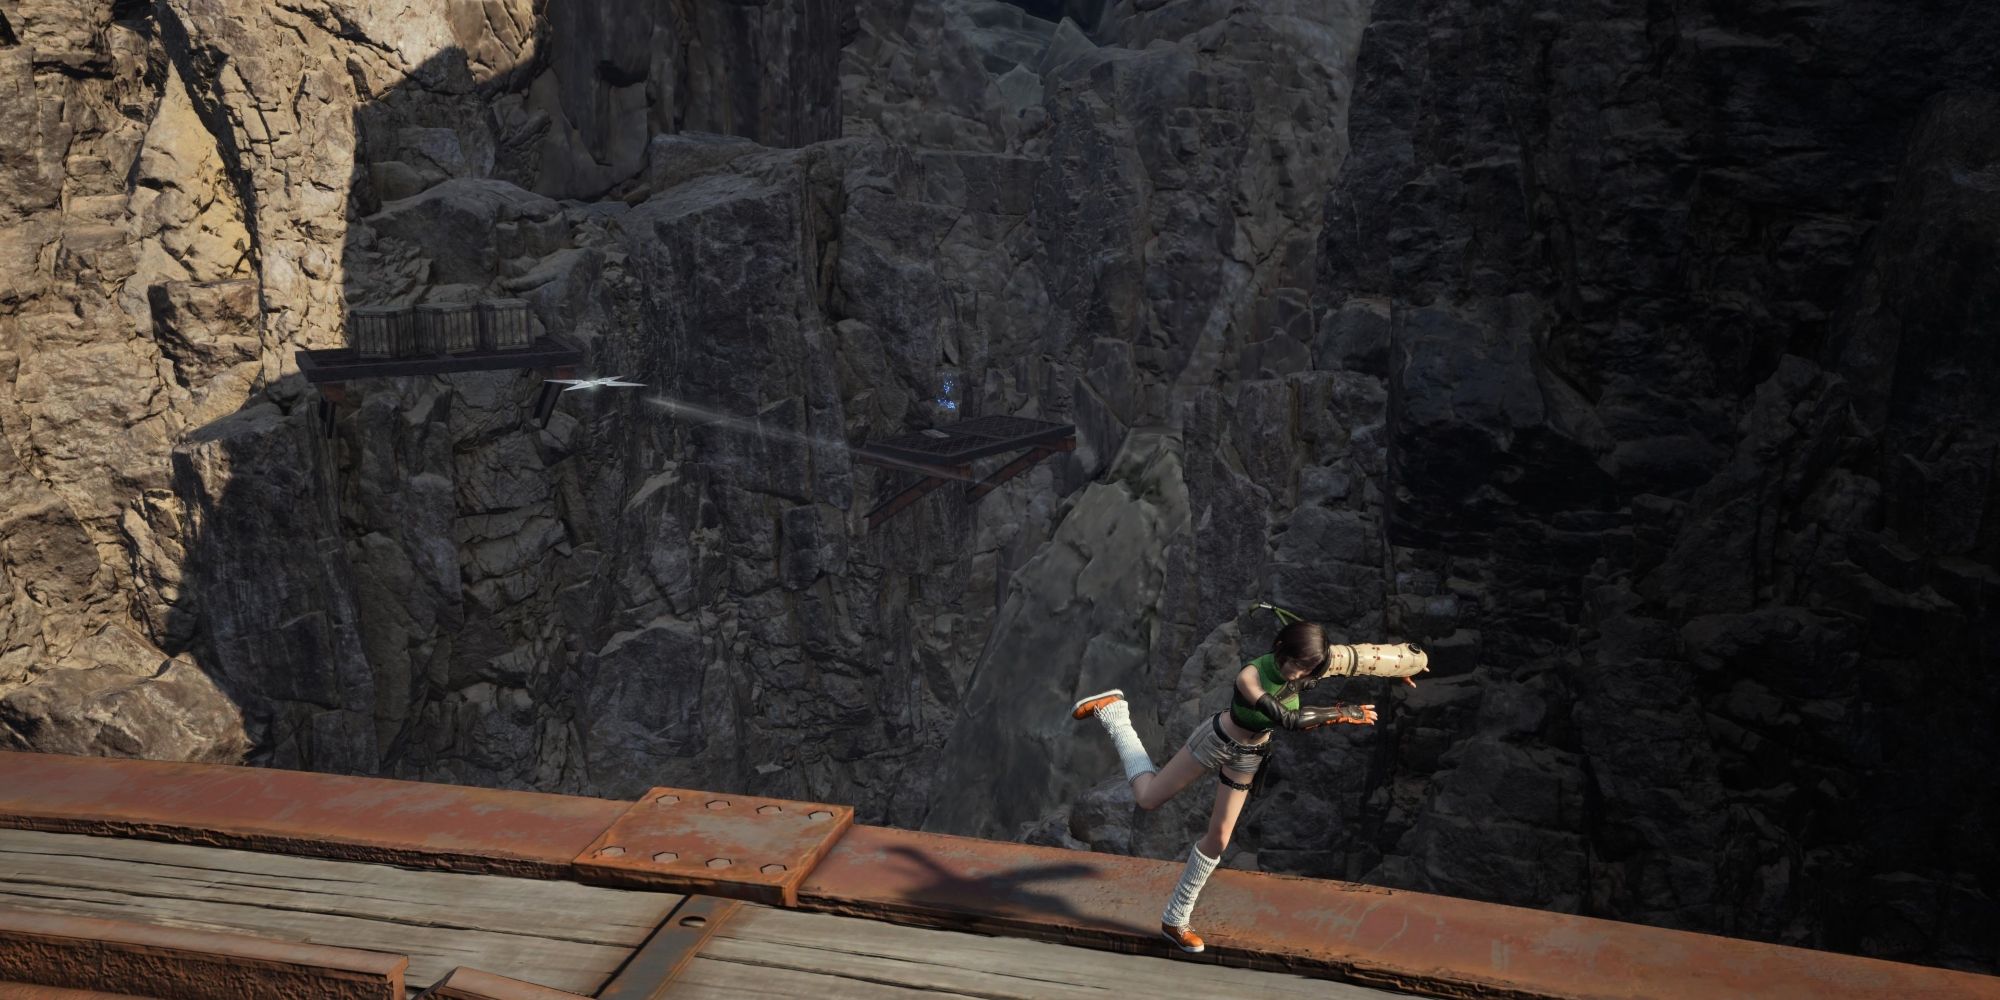 FINAL FANTASY VII REBIRTH Yuffie Throwing Weapon To Break Crate